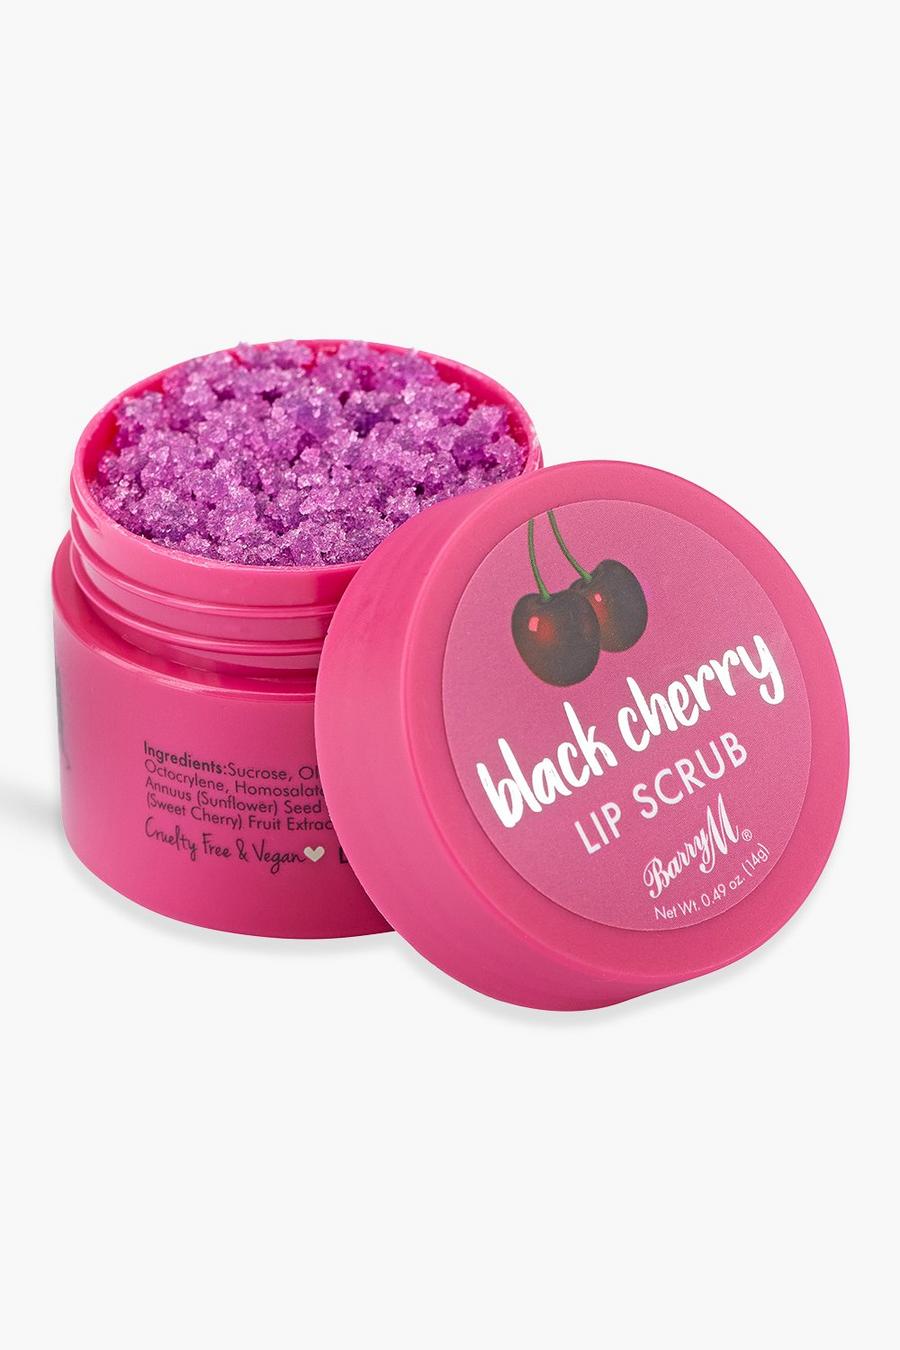 Purple violet Barry M Black Cherry Lip Scrub